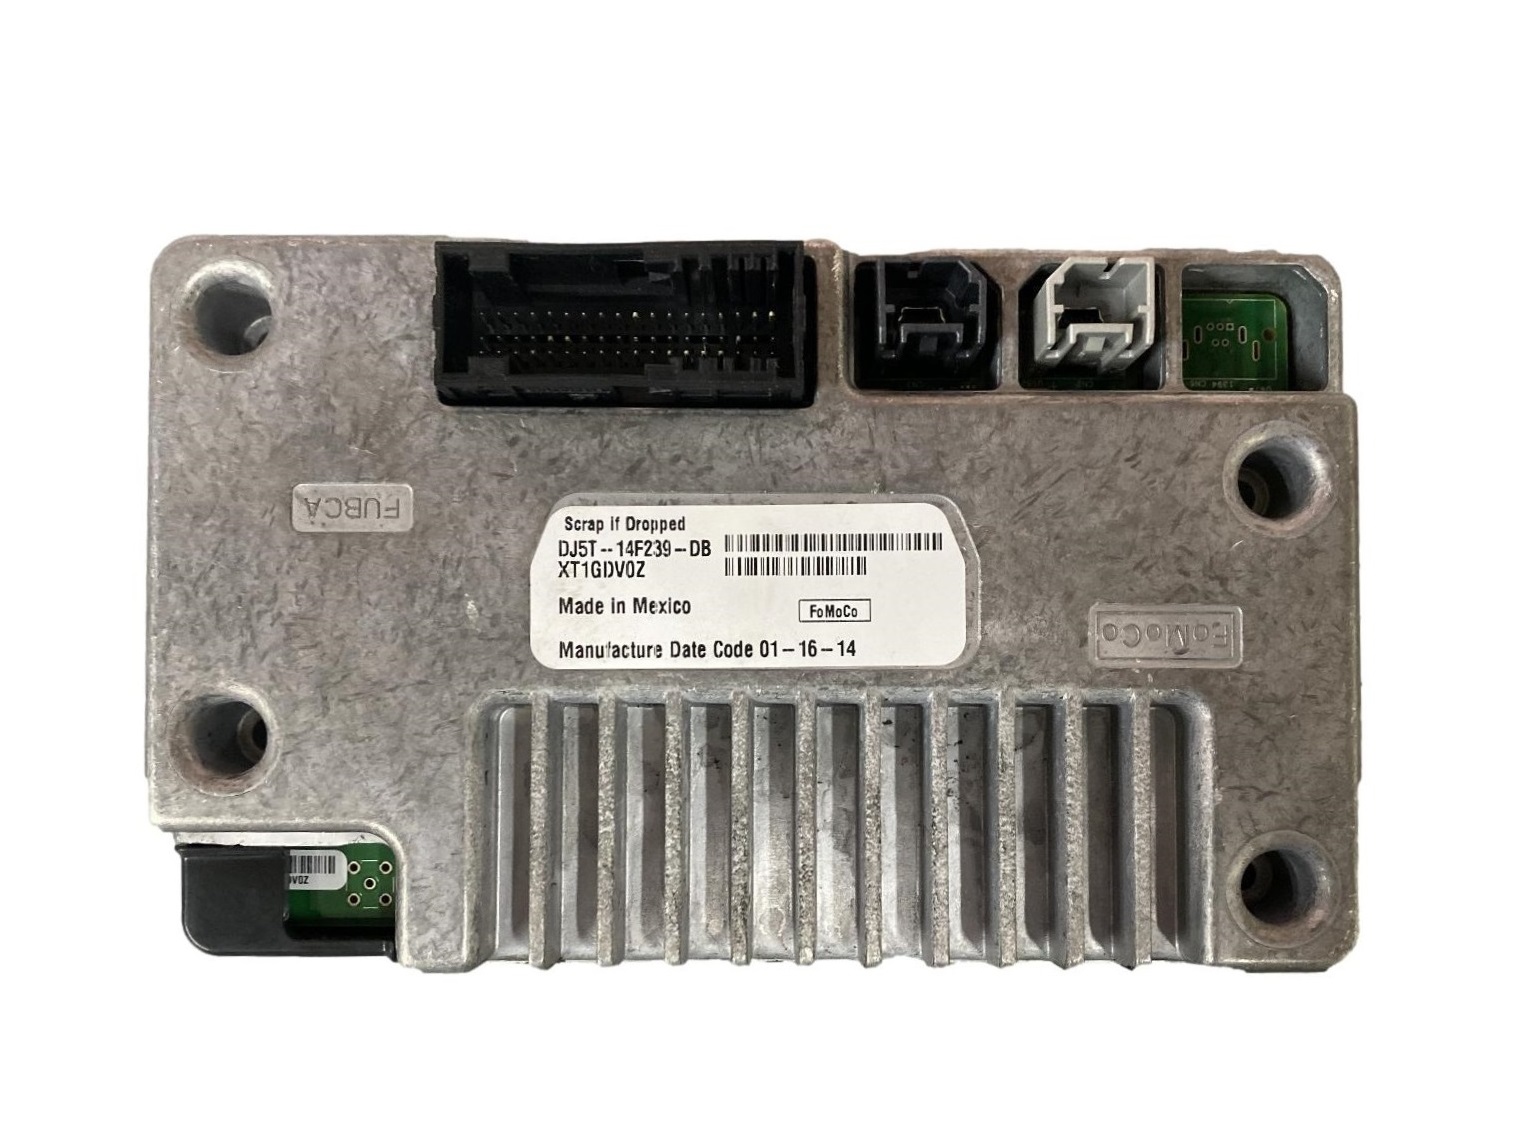 Ford Explorer (2016-2019) LCD Navigation/Radio Touchscreen Display Repair